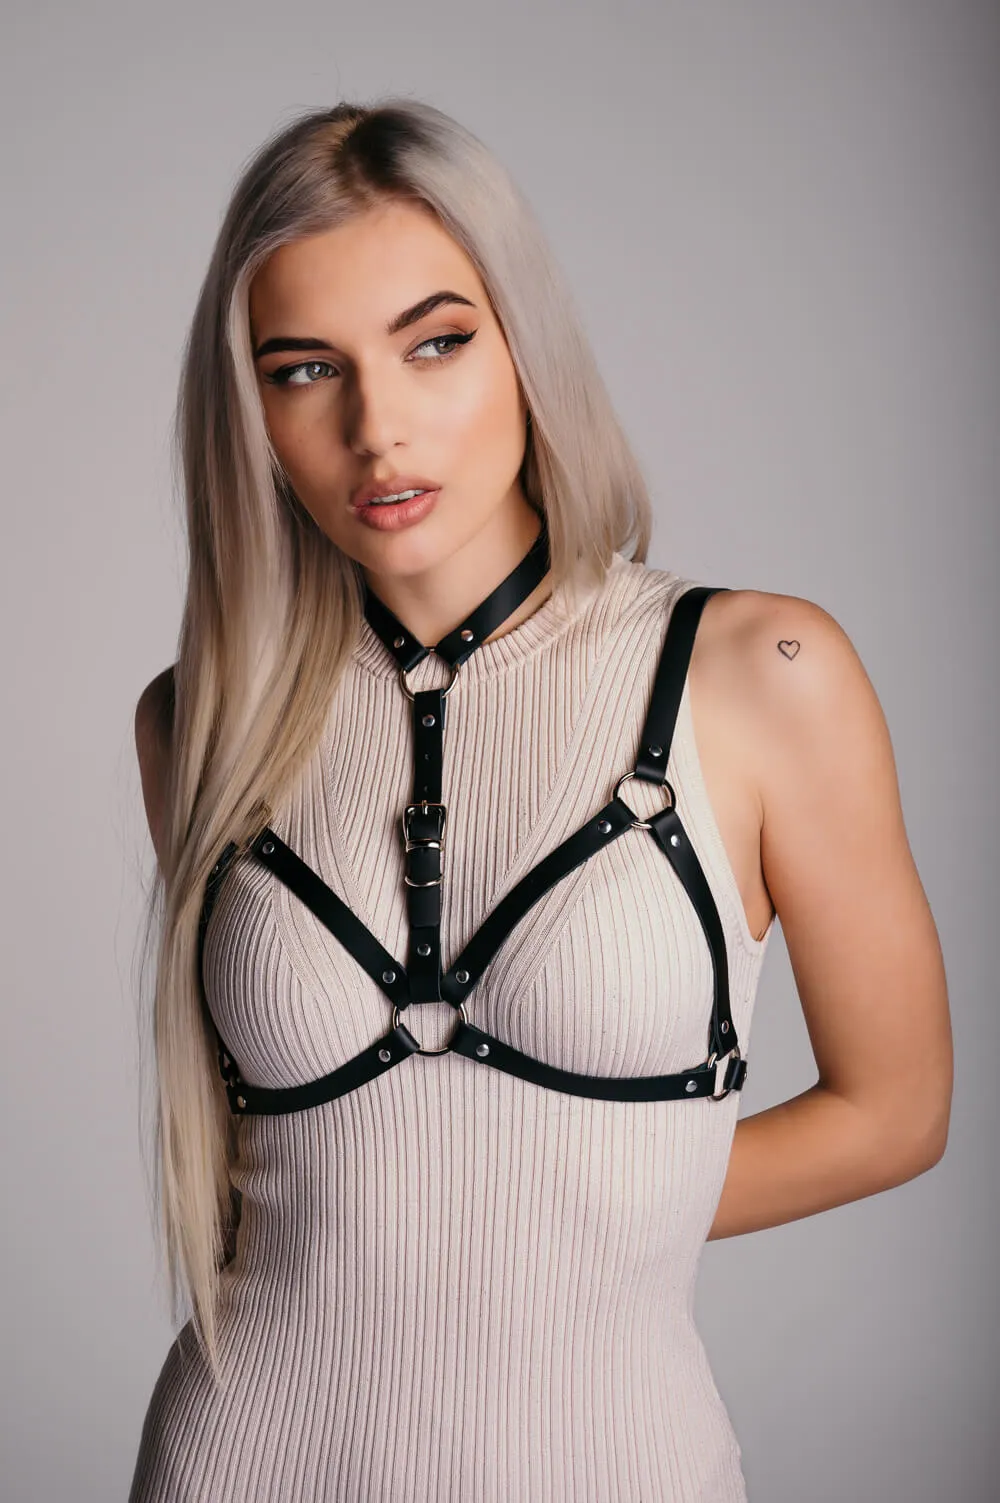 Arabella sexy leather harness with choker and black cutout bra.